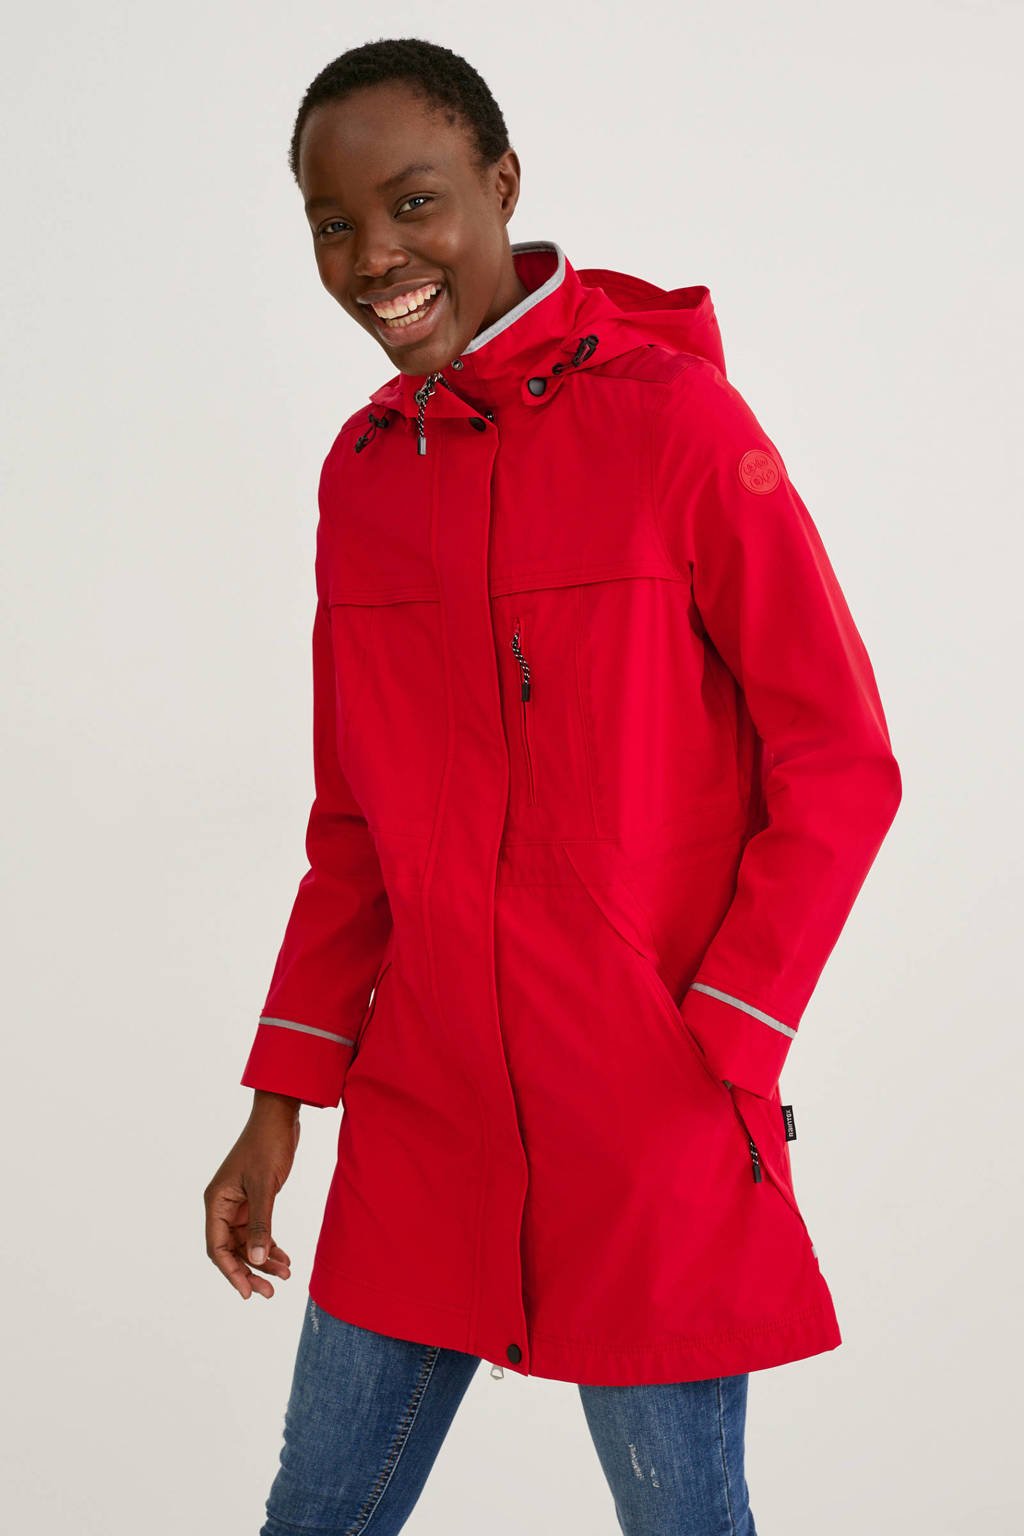 Rode dames C&A jas van nylon met lange mouwen, capuchon en rits- en drukknoopsluiting